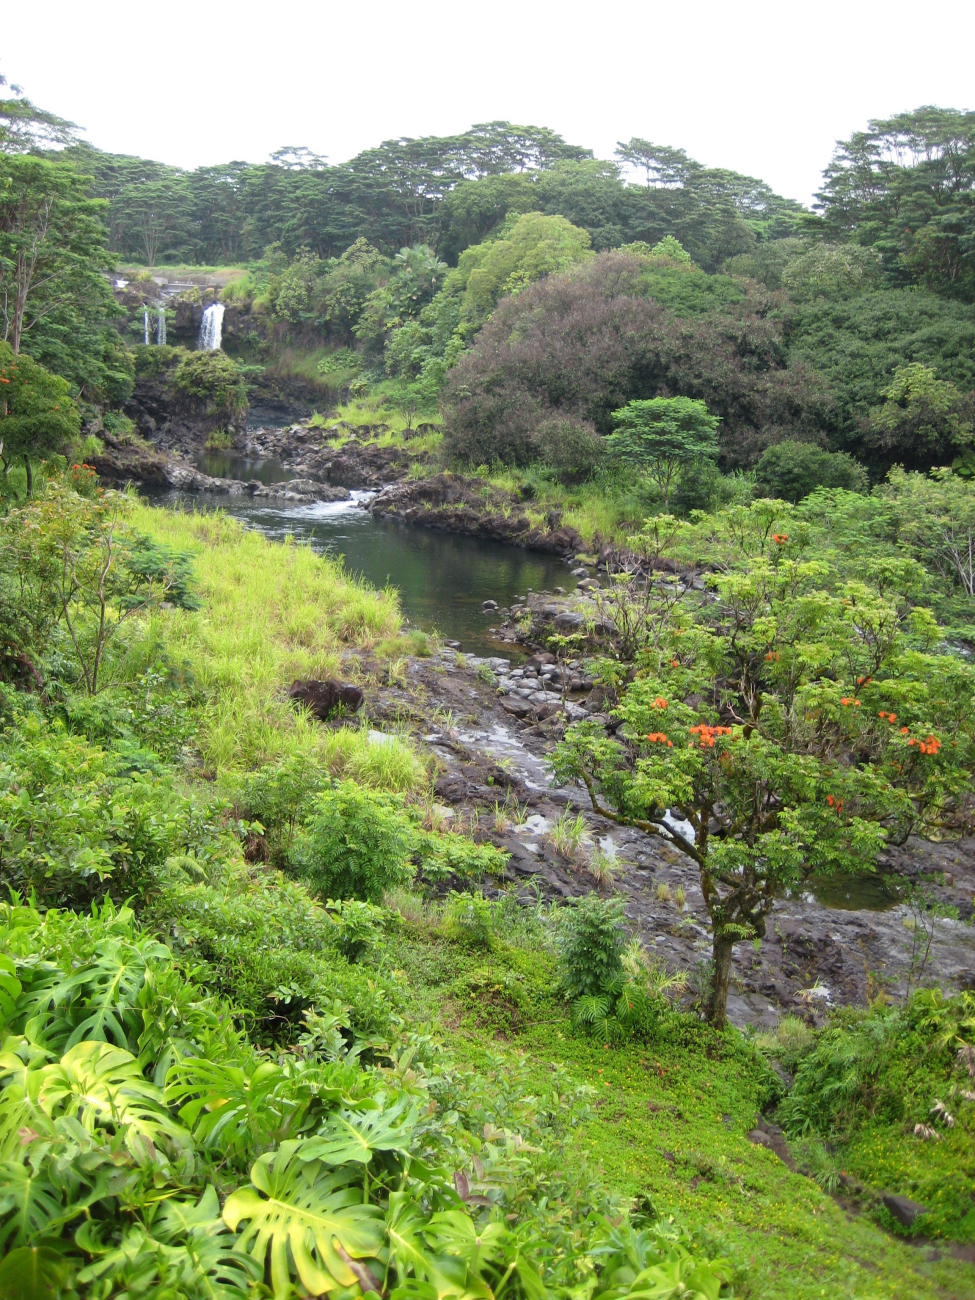 Lush Hawaiian foliage and waterfall